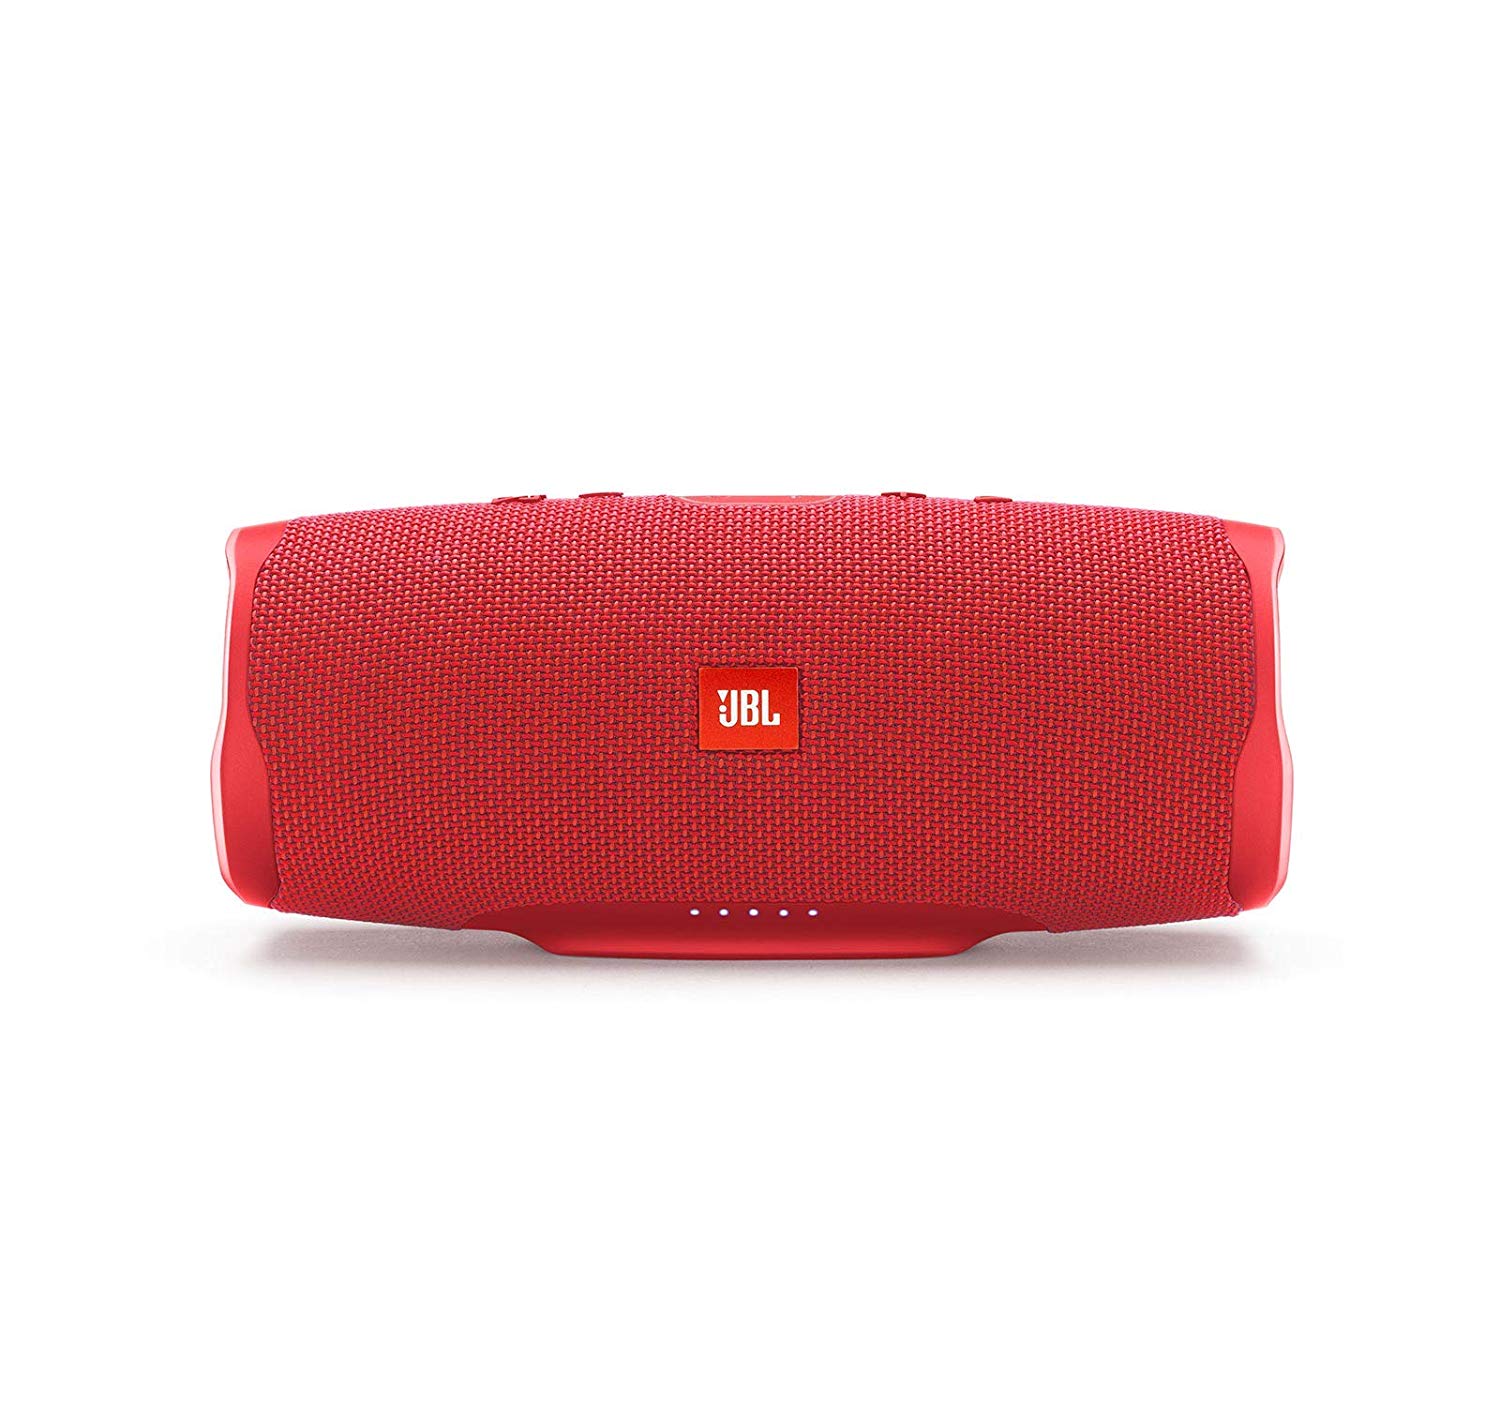 JBL Charge 4 Portable Waterproof Wireless Bluetooth Speaker - Red - image 1 of 5